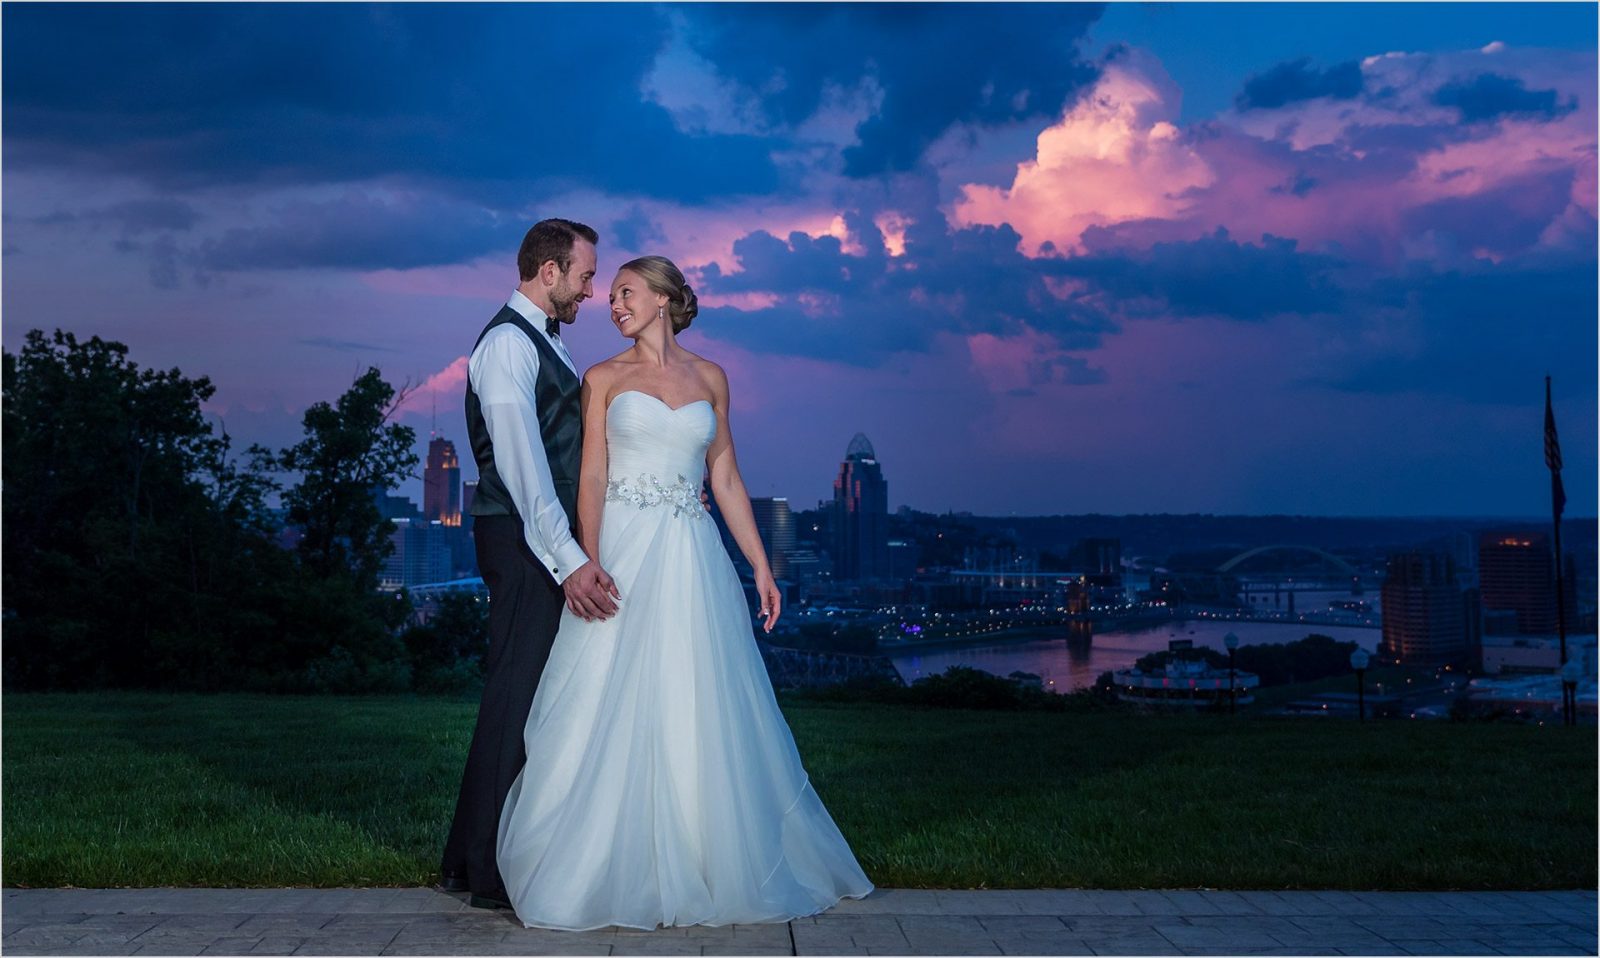 Drees Pavilion Covington Kentucky wedding photography Purple skies sunset